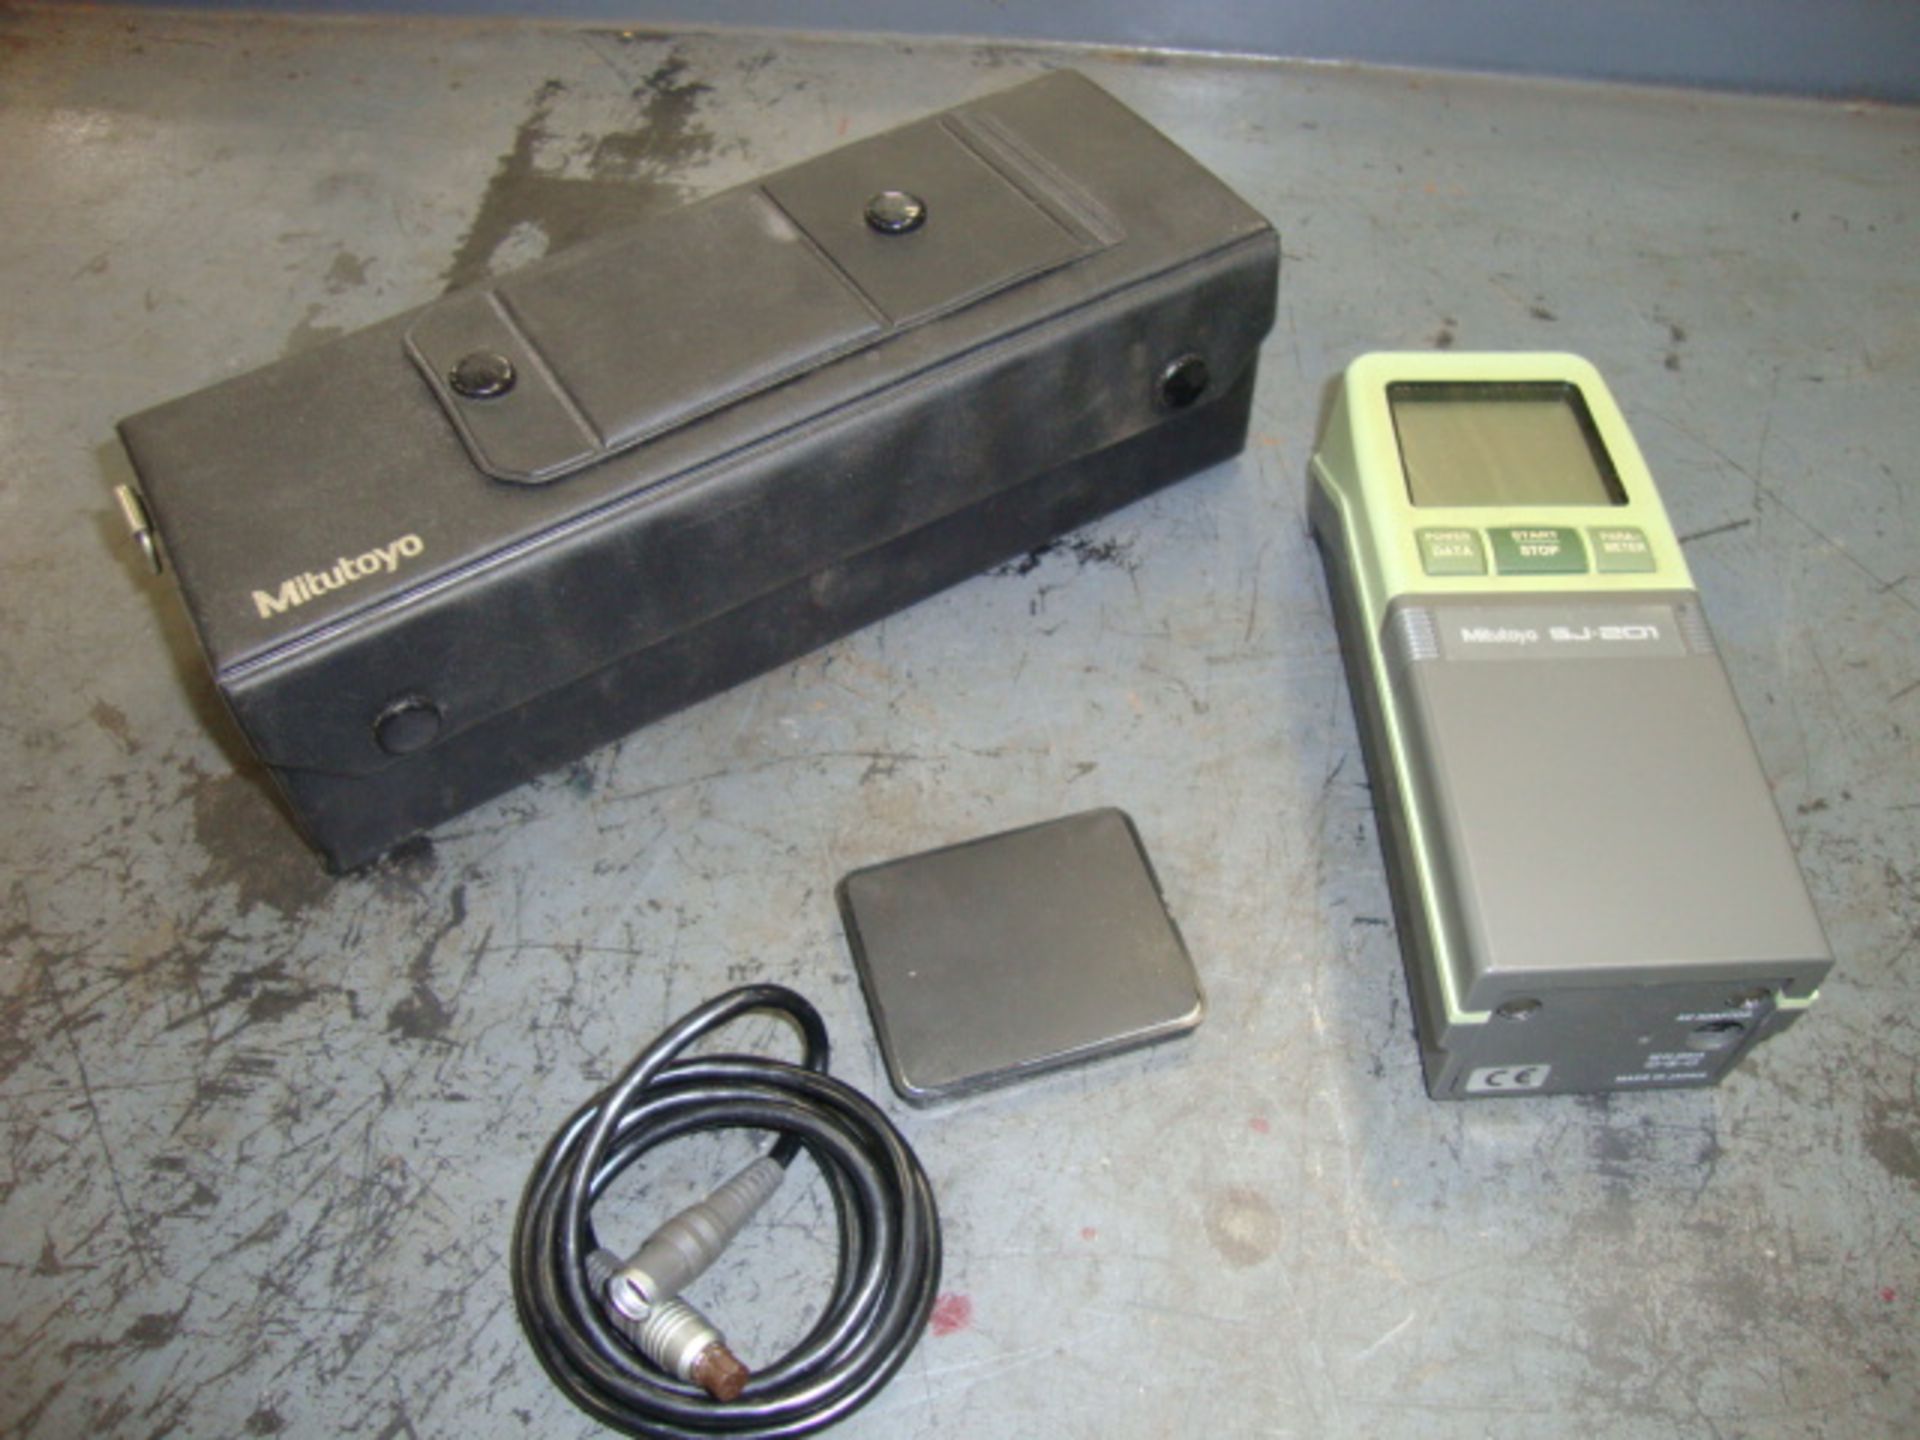 Mitutoyo Profilometer Surface Finish Tester in Case, Model SJ-201